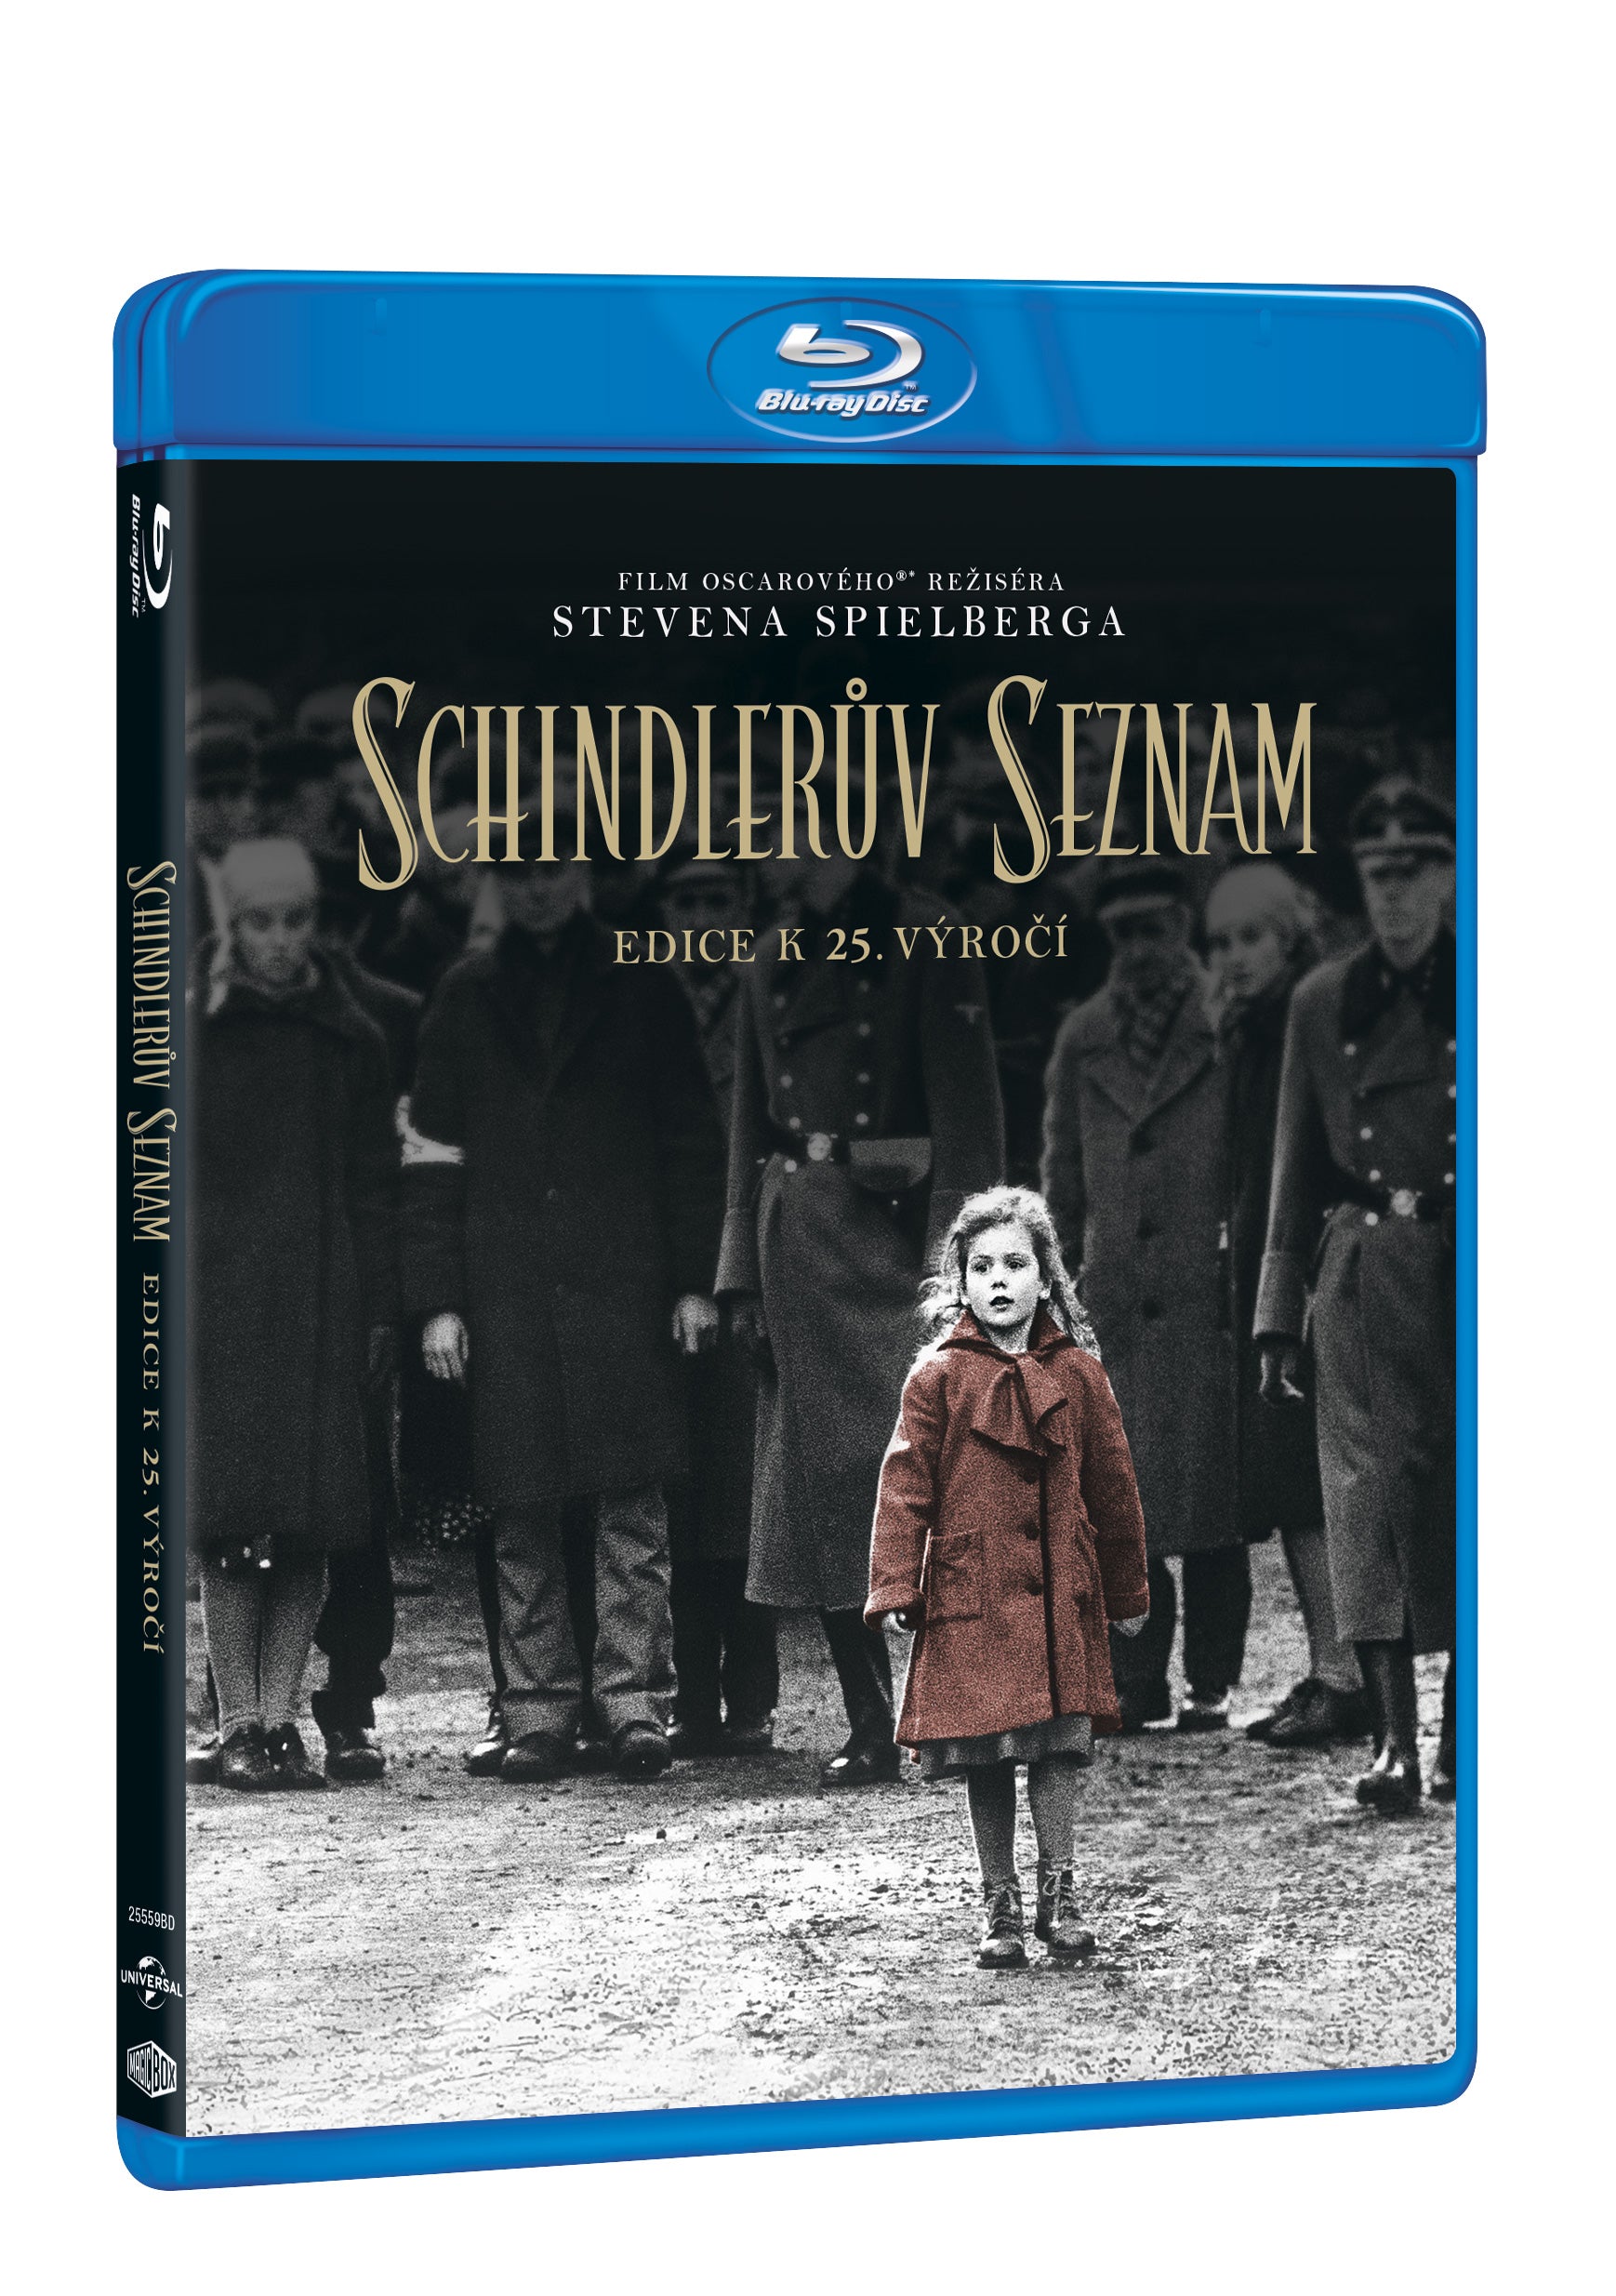 Schindleruv seznam vyrocni edice 25 let 2BD (BD+BD bonus disk) / Schindler’s List 25th Anniversary edition - Czech version